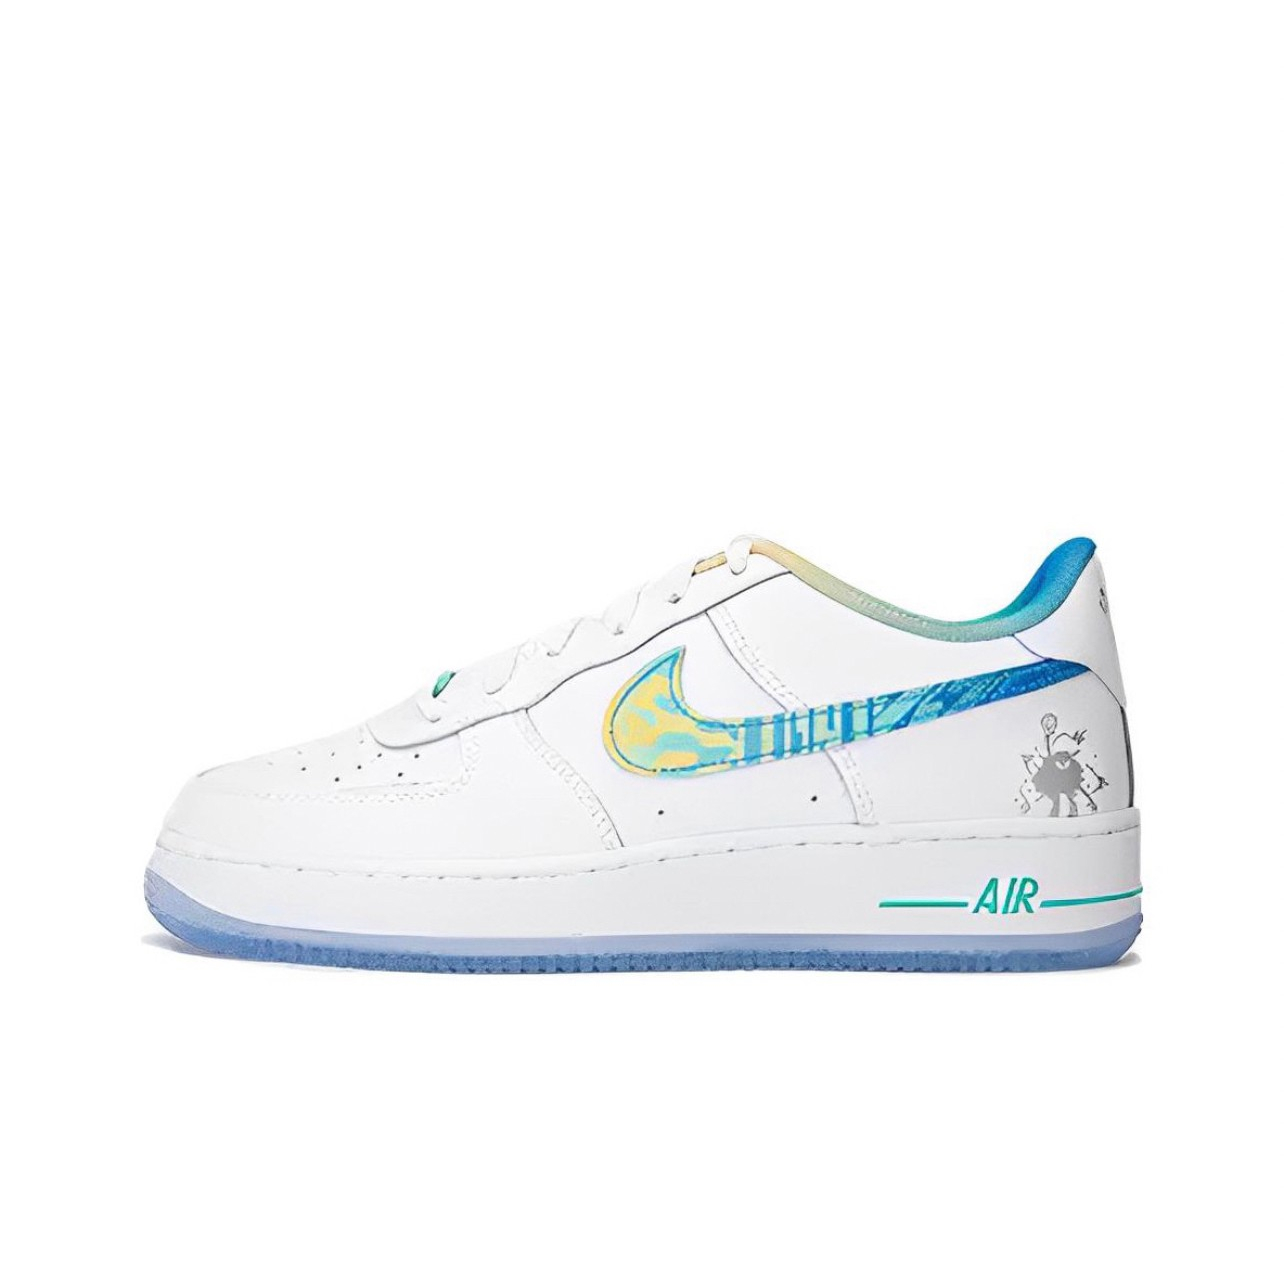 【吉米.tw】代購  Nike Air Force 1 LOW LV8 果凍底 休閒鞋 籃球 漸變色 白綠藍 MAY-